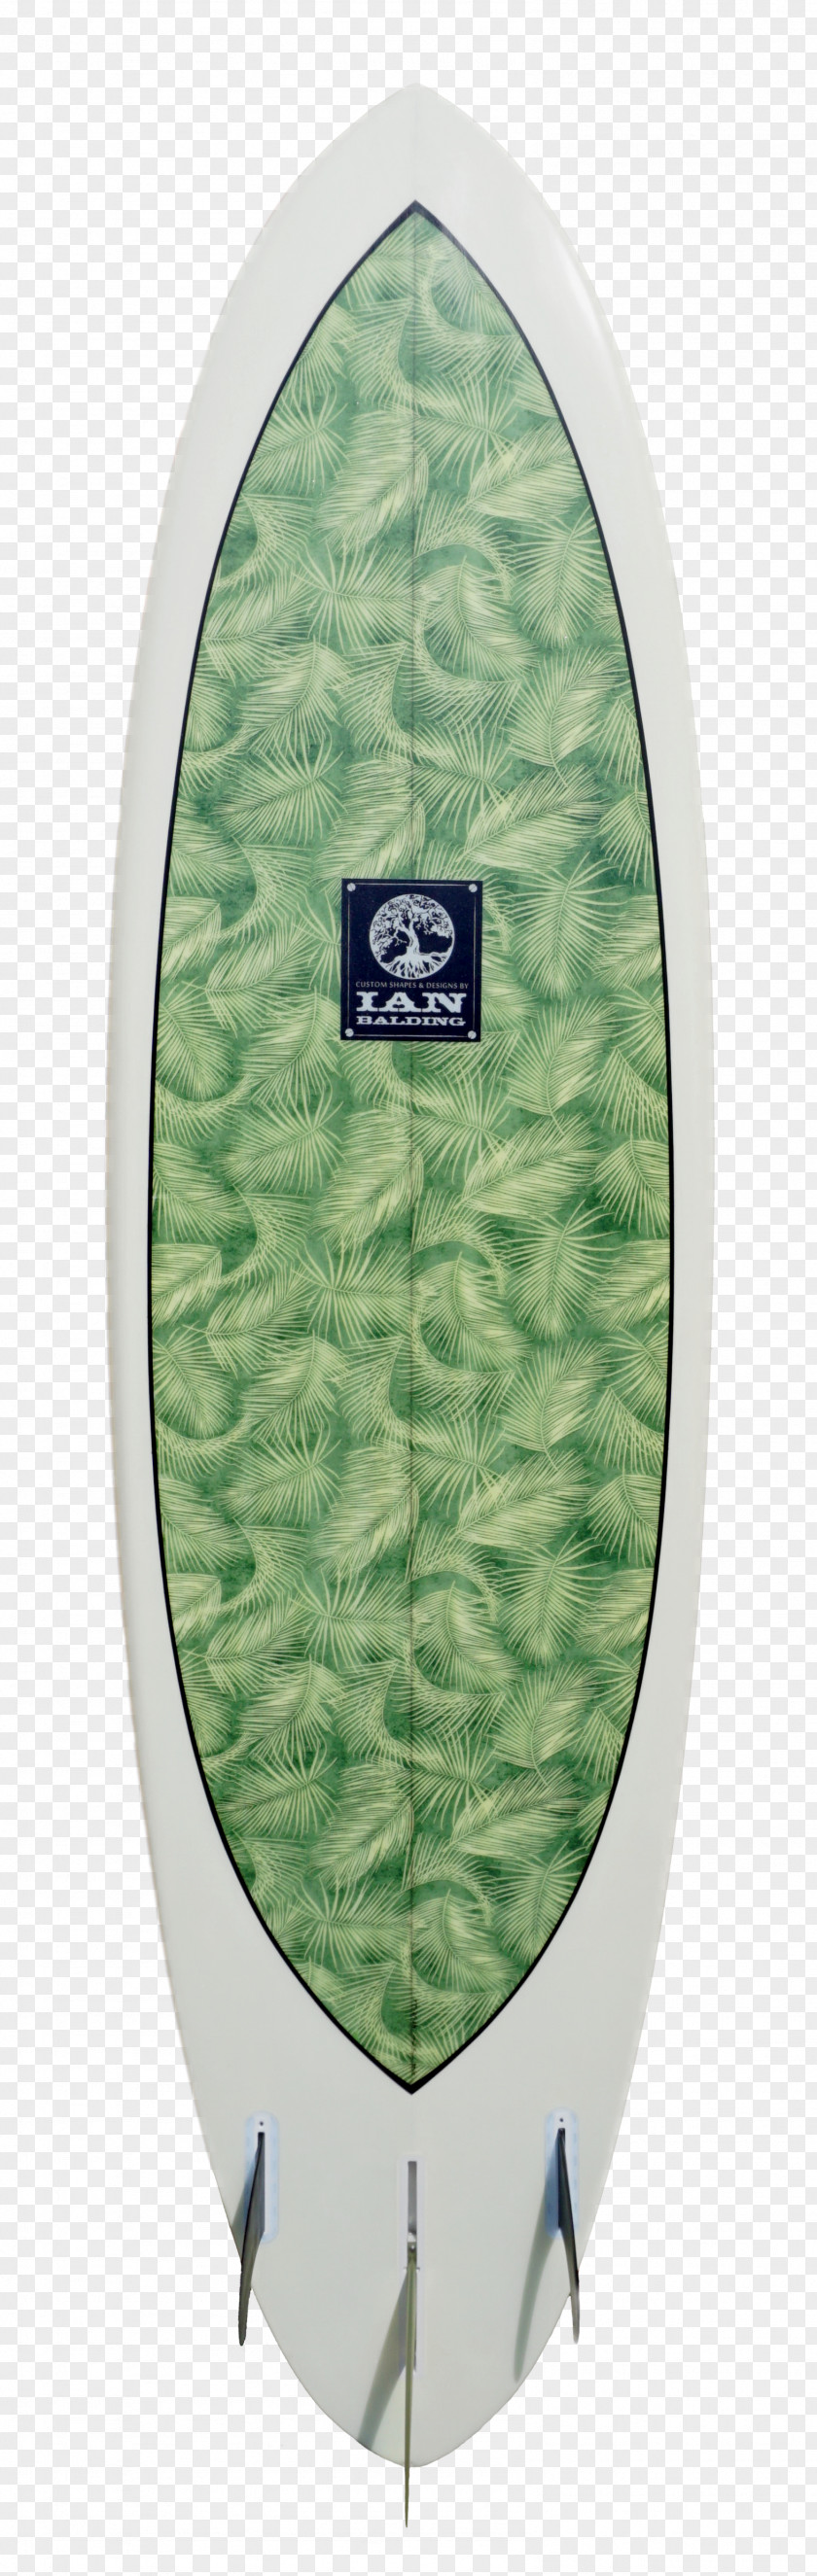 Surf Board Surfboard Glass Length Shutter Speed PNG